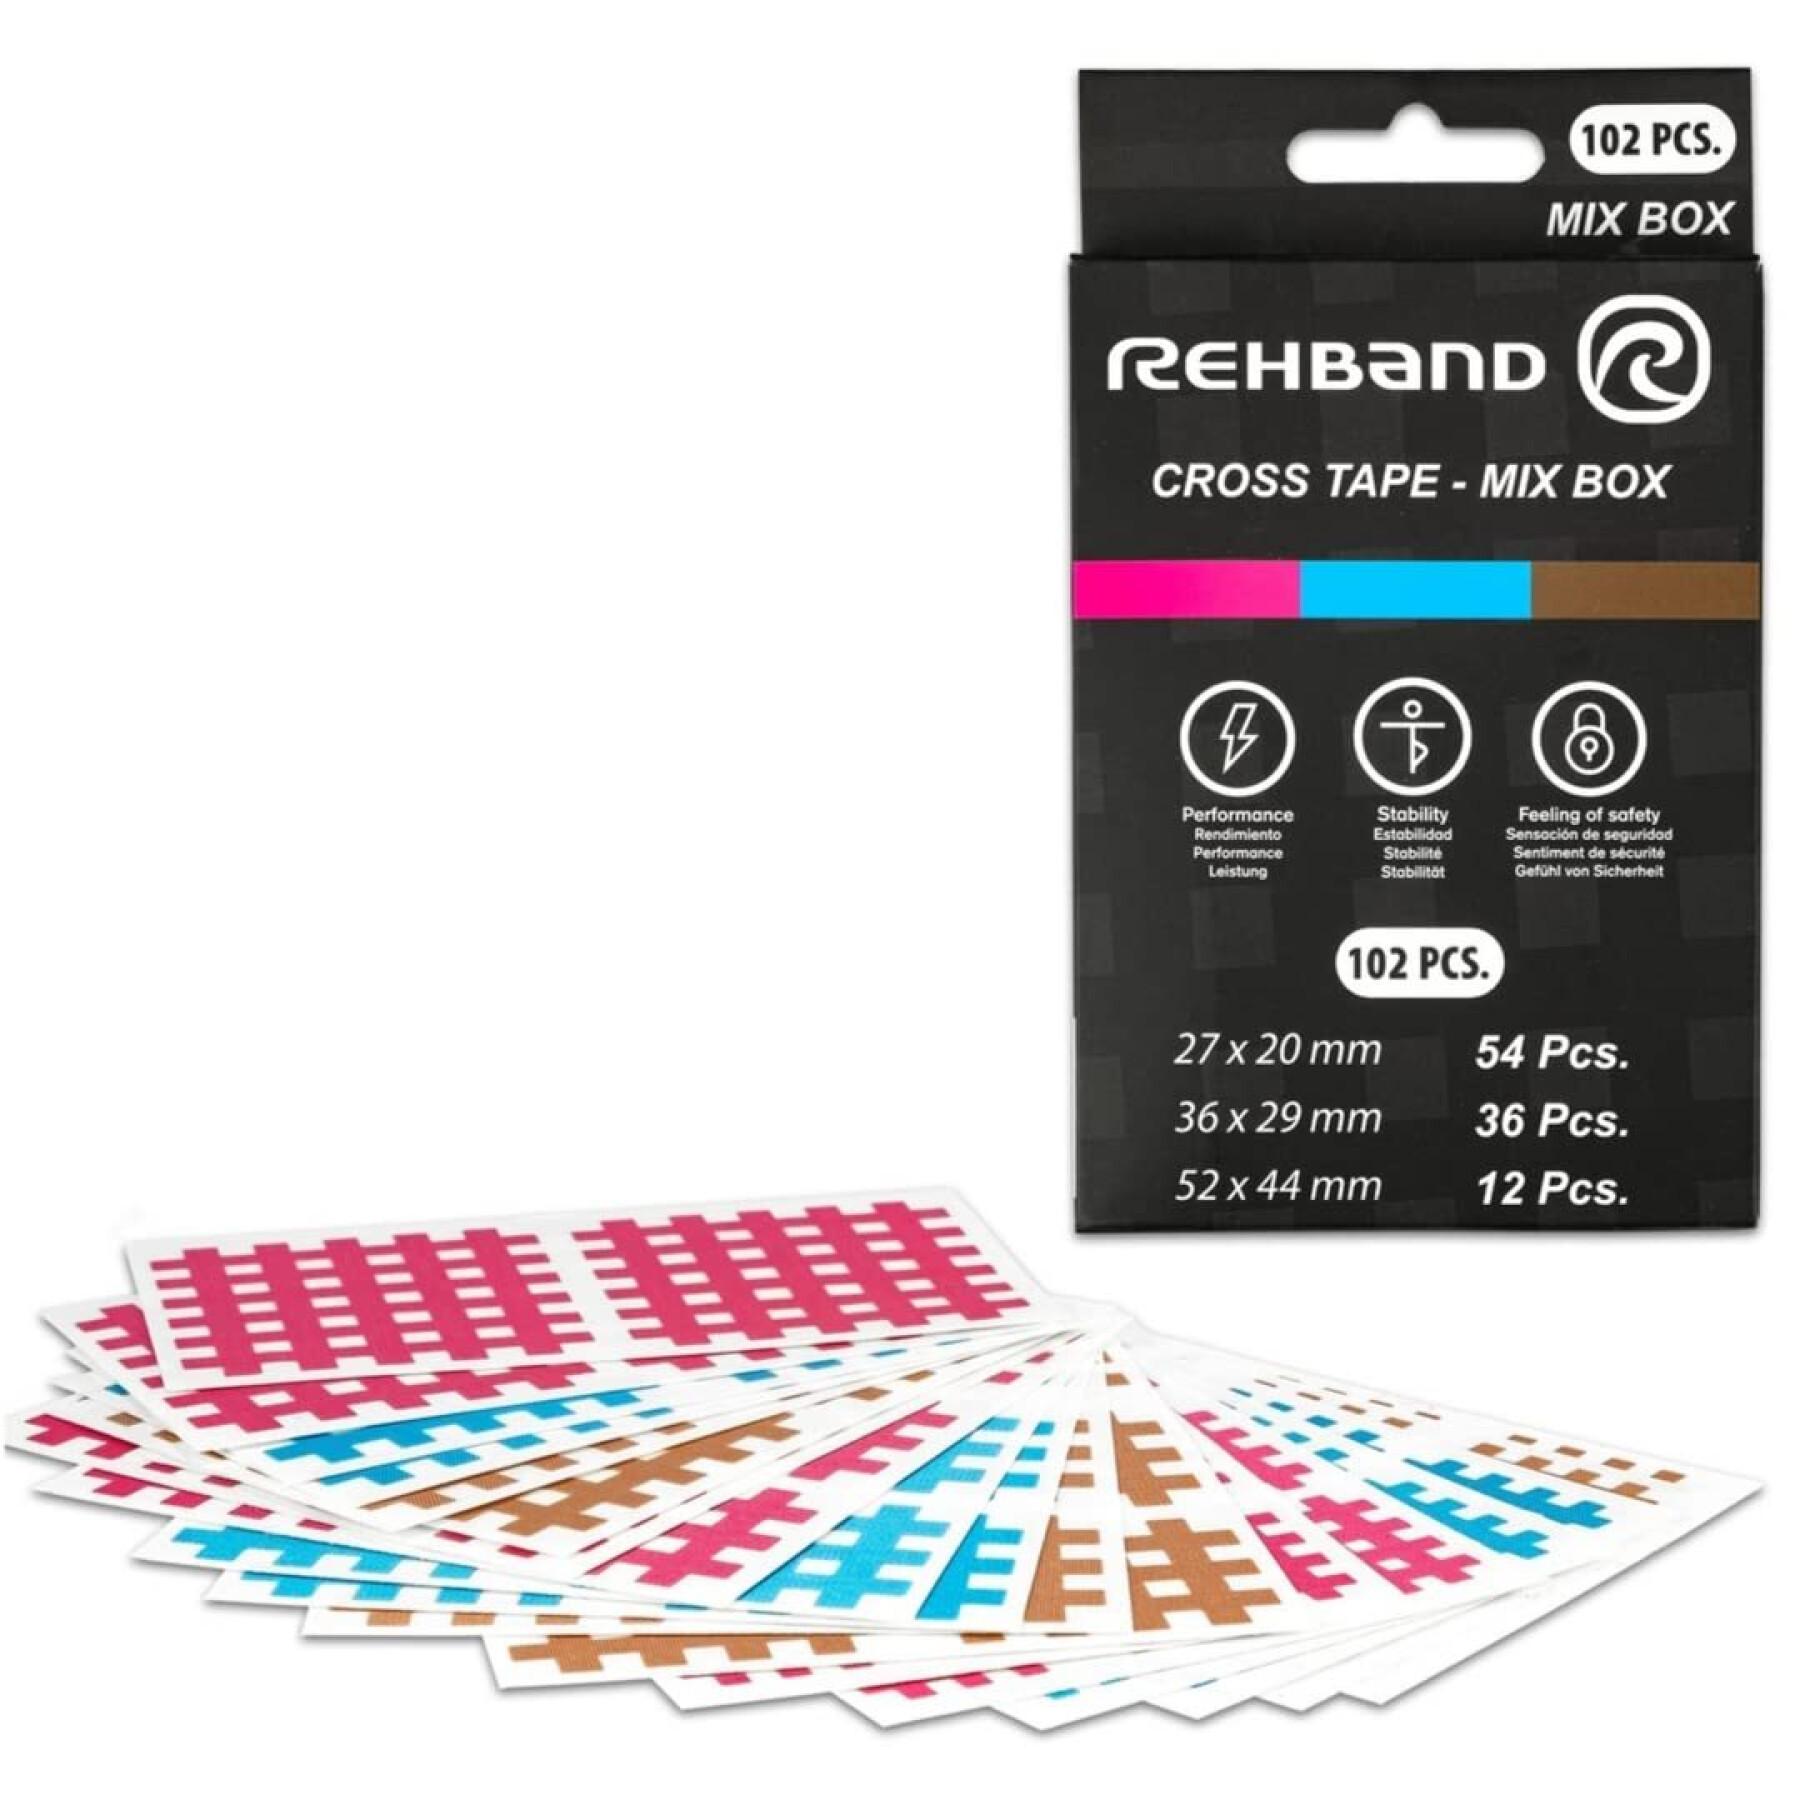 Paquete de 102 tiras de rejilla Rehband